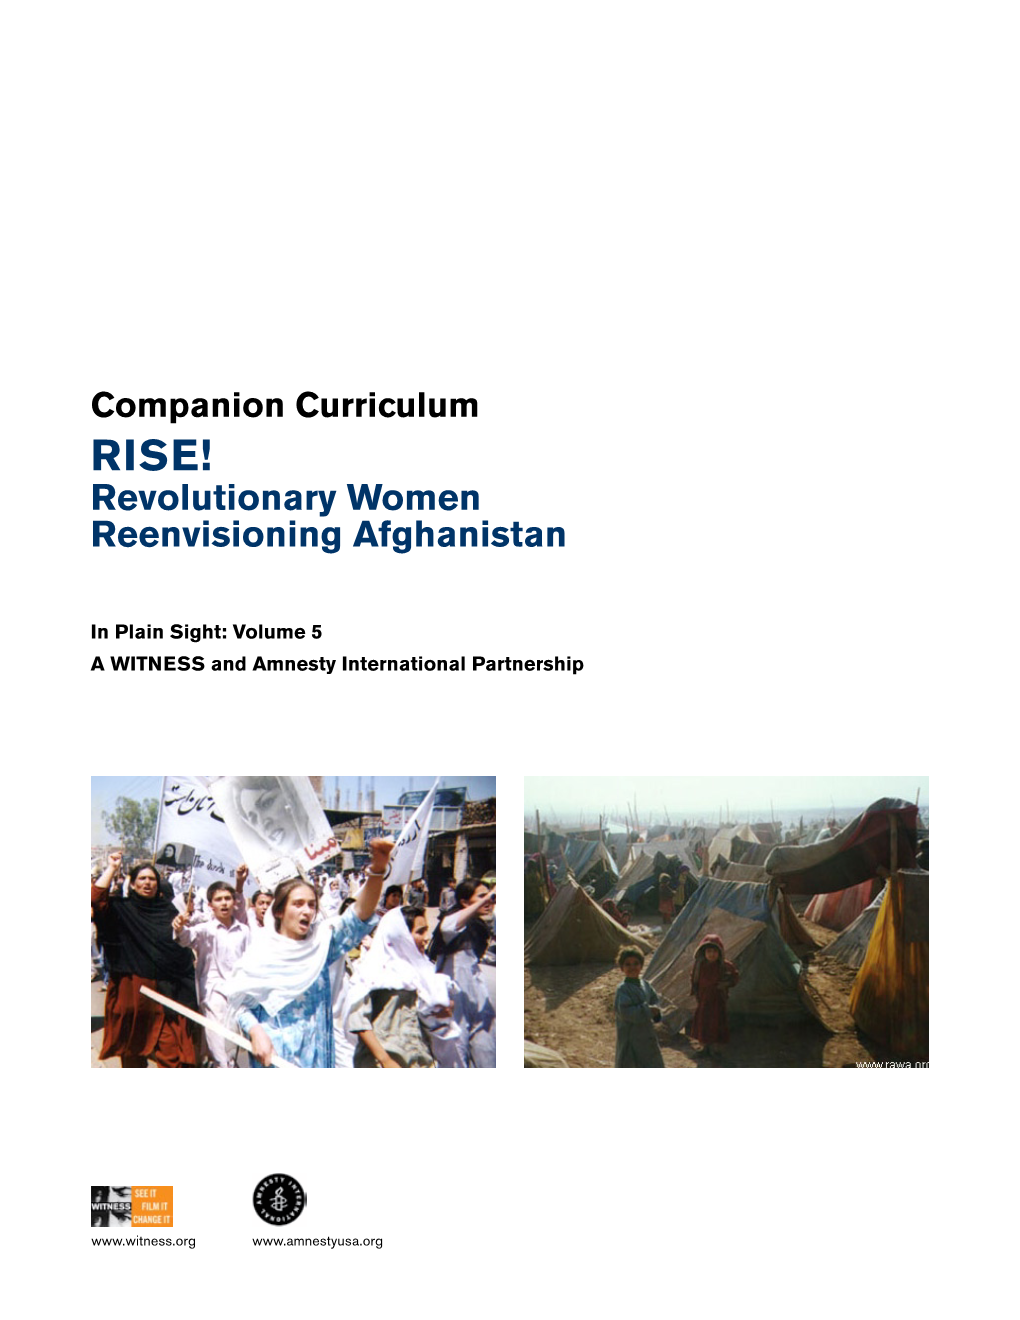 Revolutionary Women Reenvisioning Afghanistan